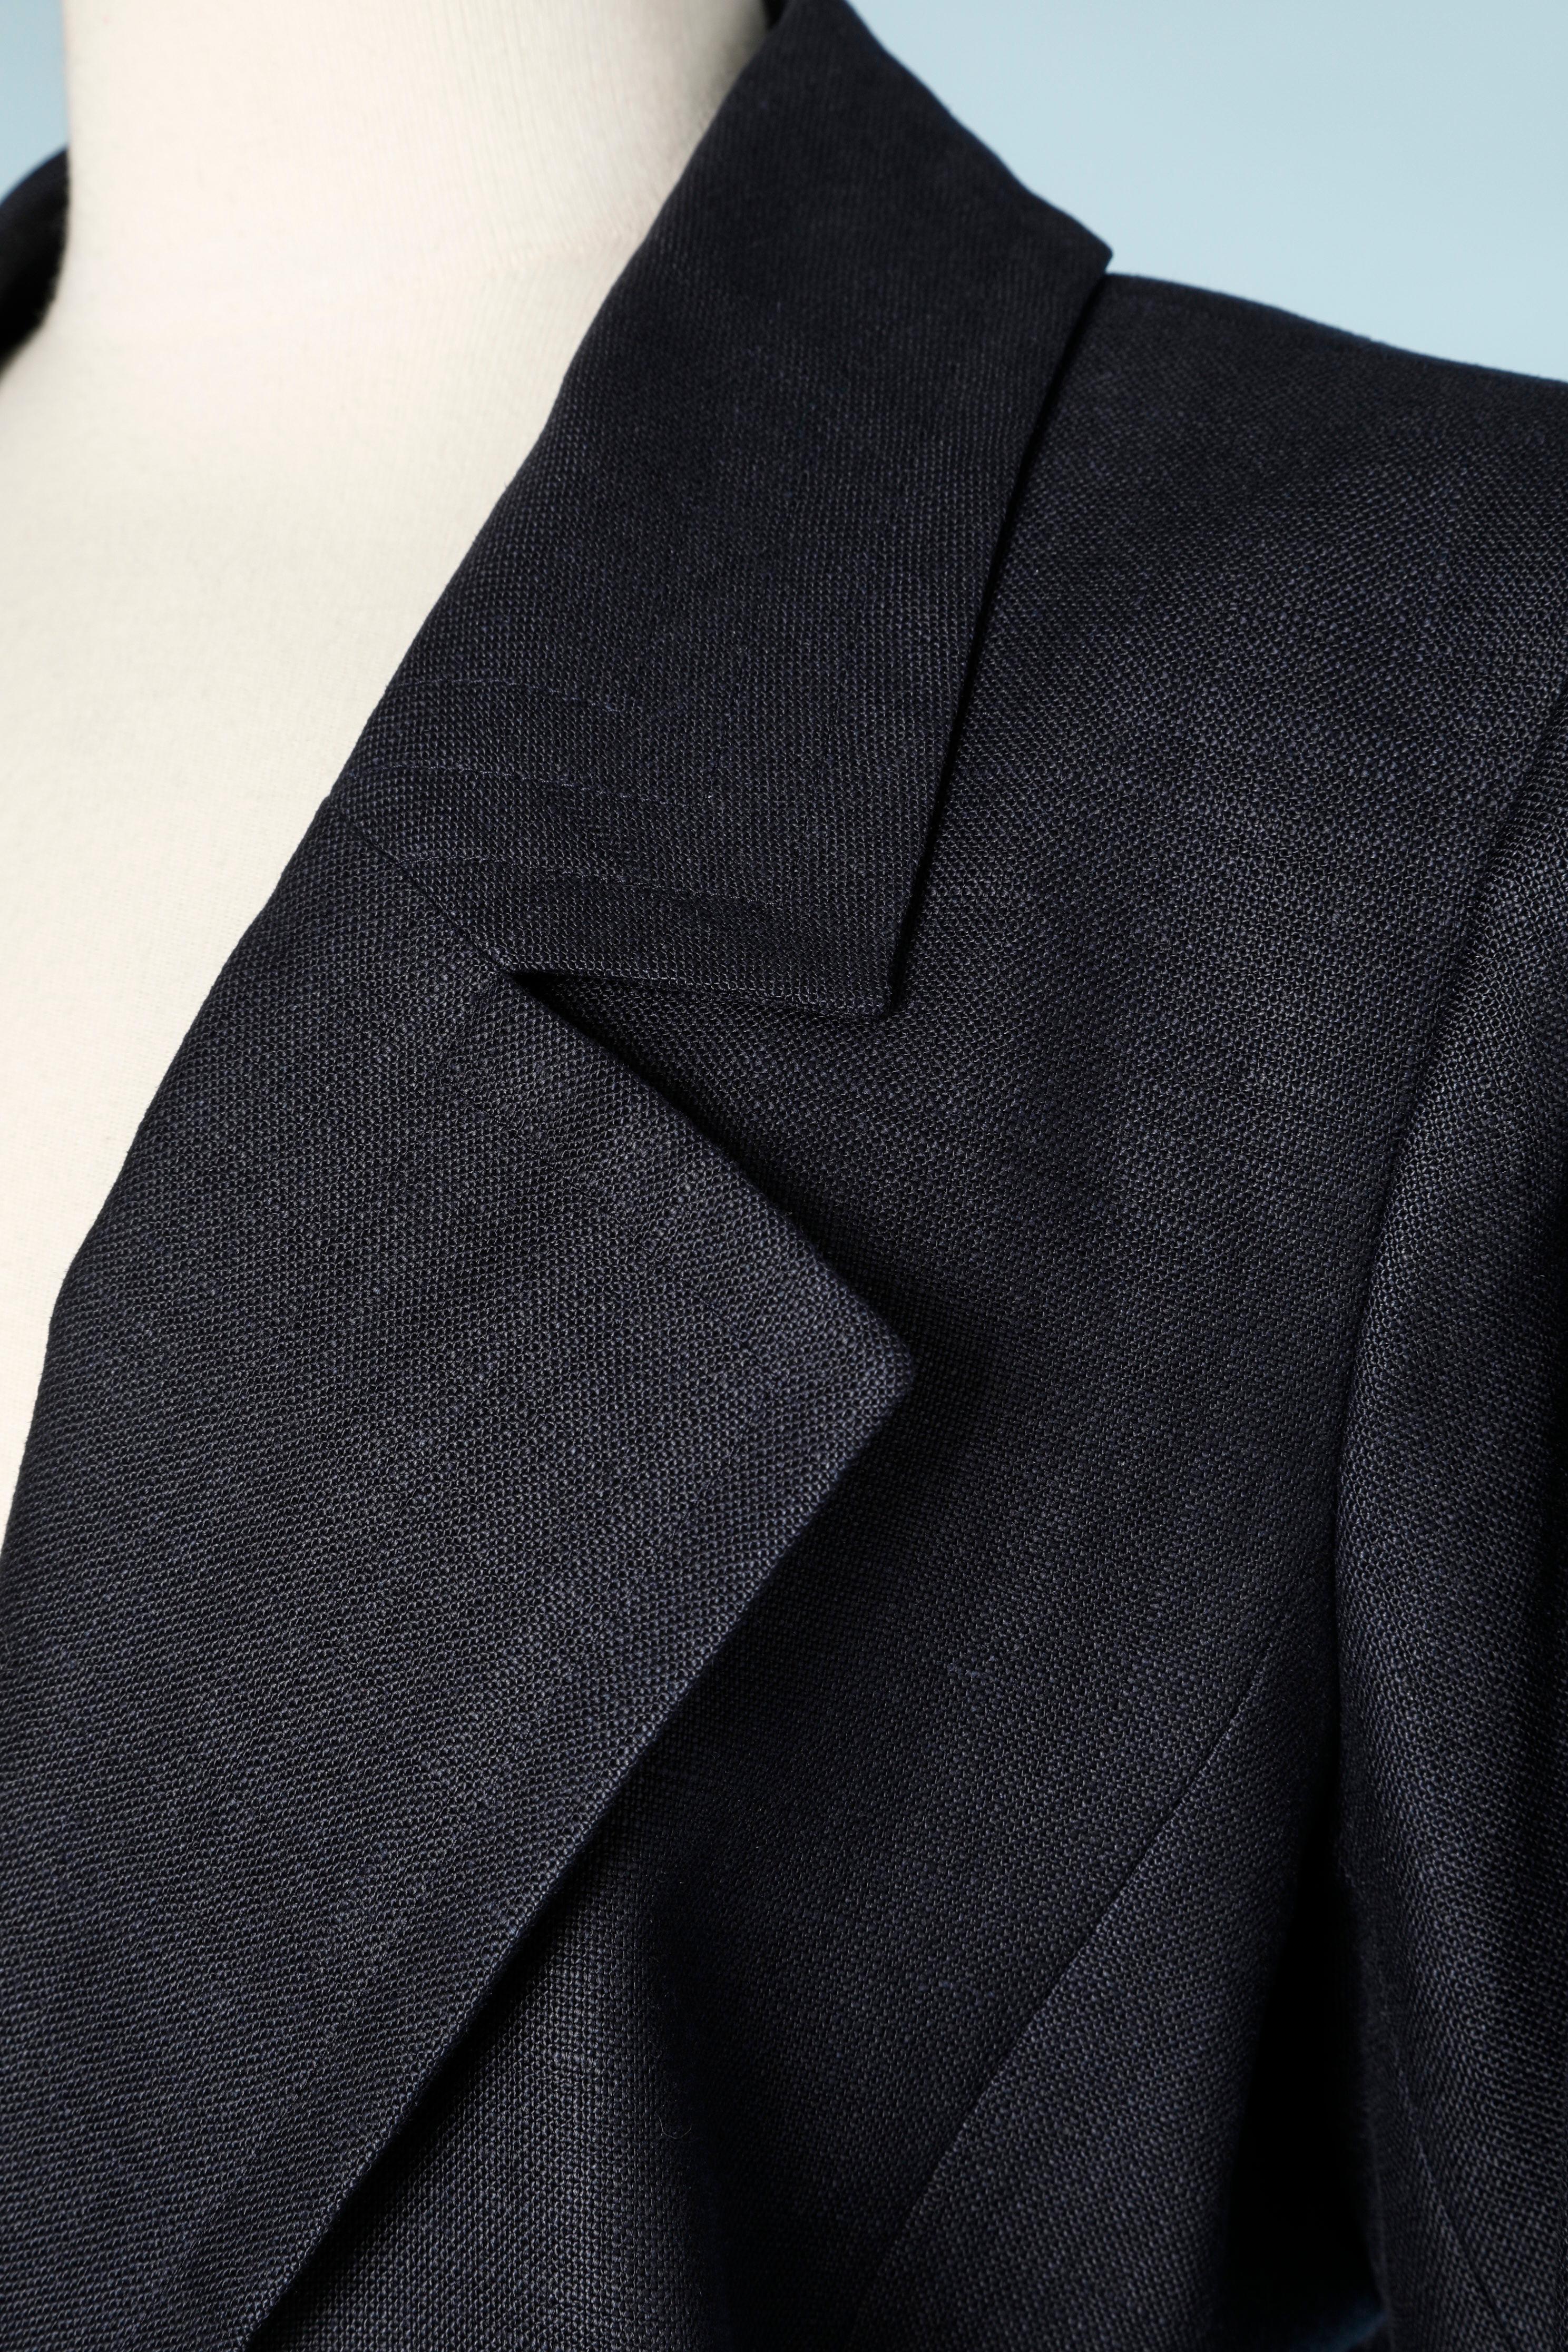 Navy blue linen skirt-suit . Main fabric: 100% linen. Lining: 55% acetate 45% rayon
SIZE 40 (Fr) 10 (Us) 